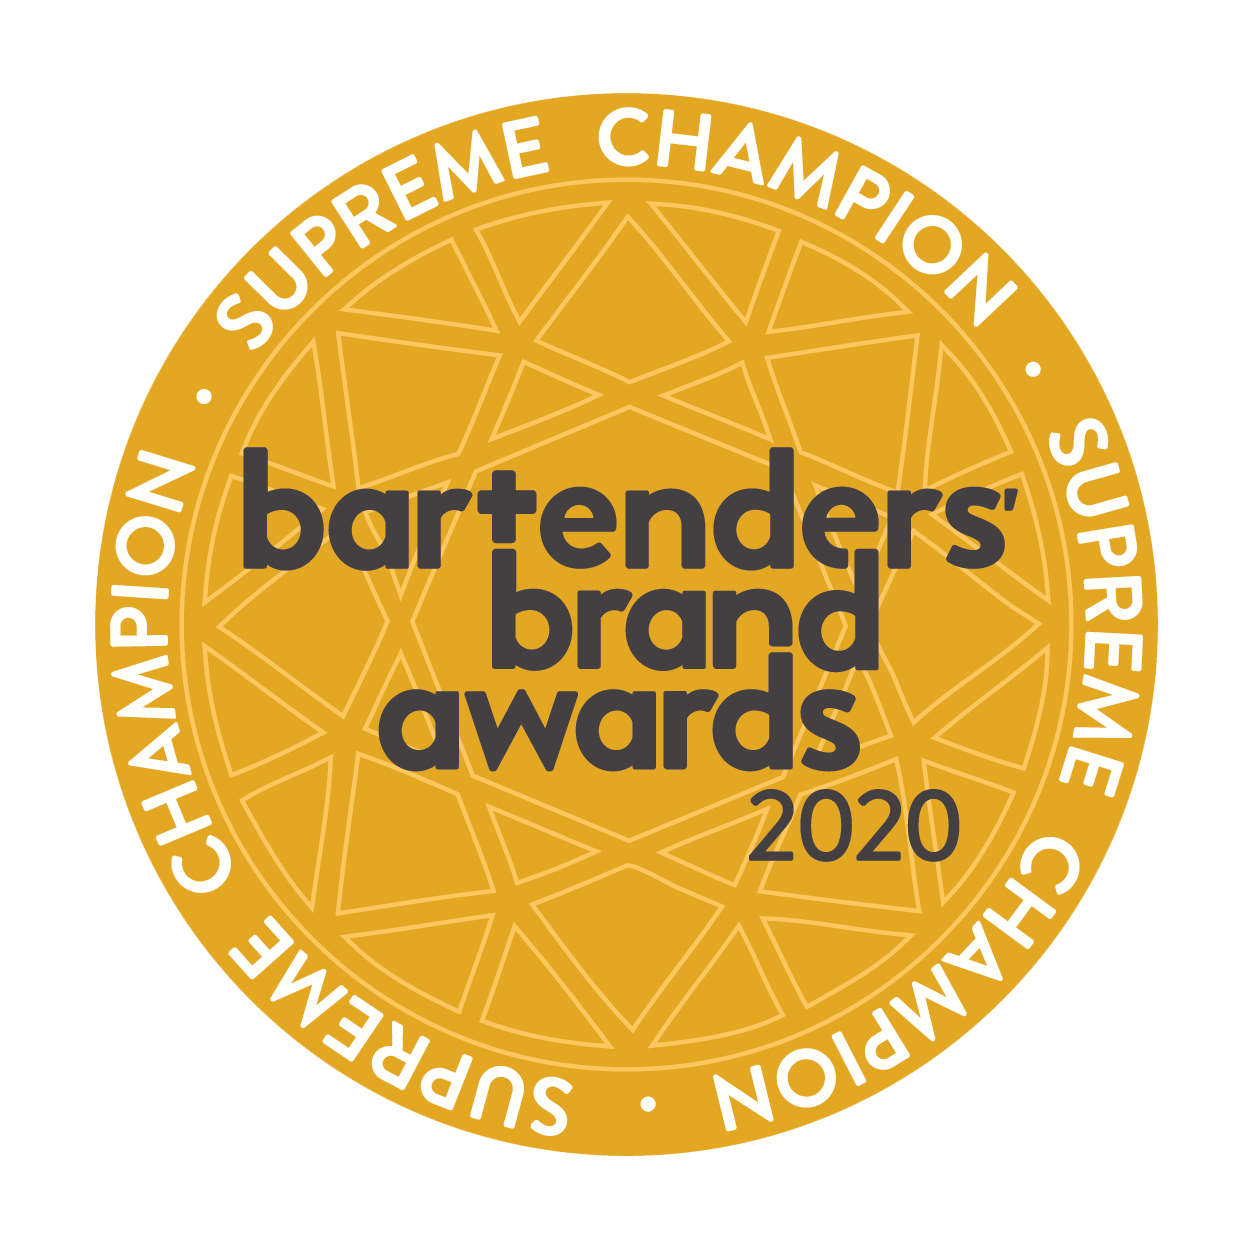 Bartenders Brand Awards 2020 Supreme Champion award